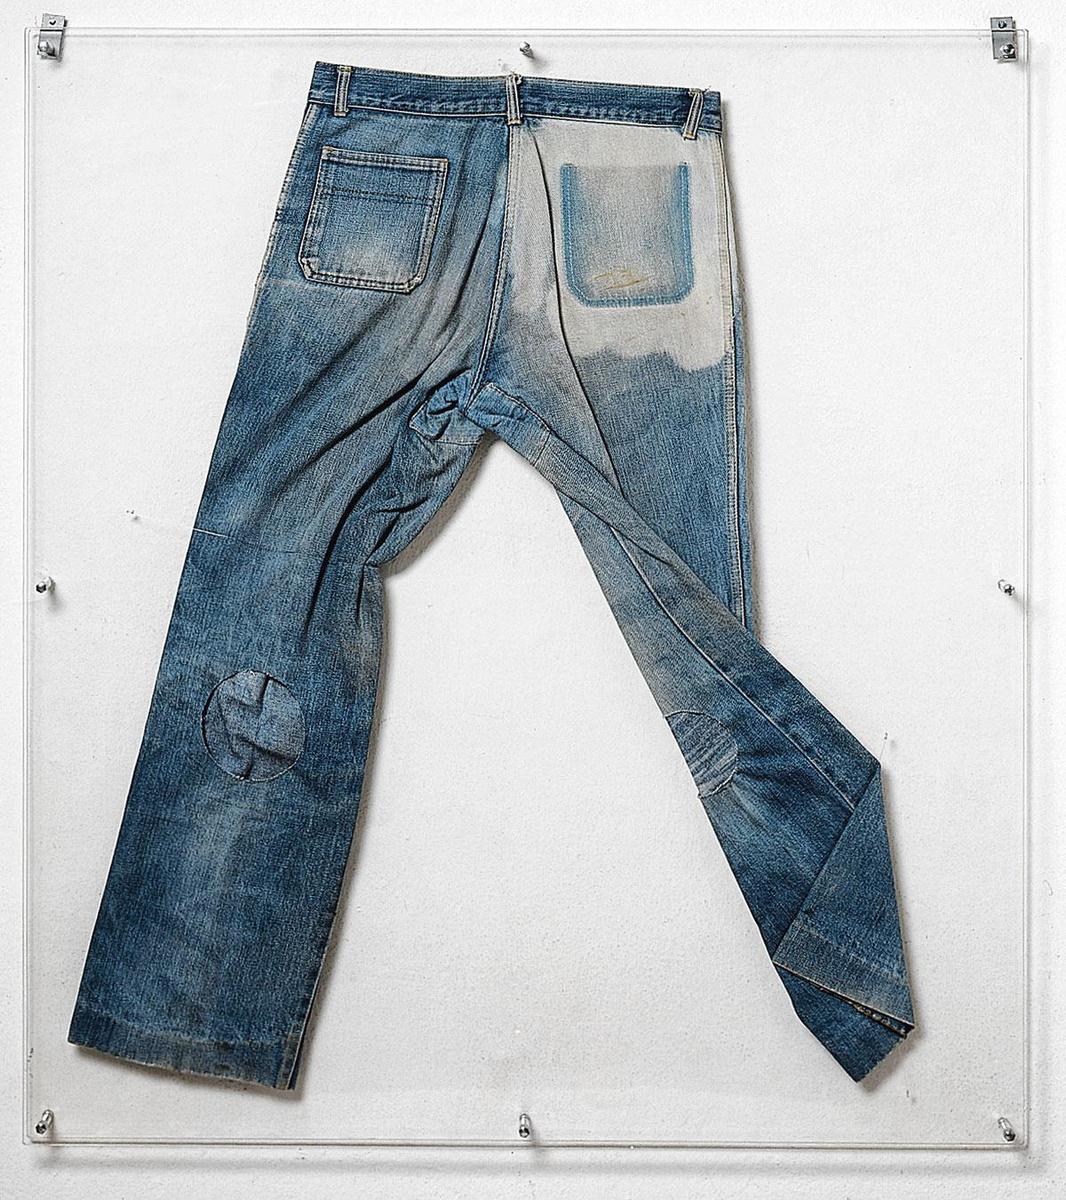 Joseph Beuys La jambe d'Orwell, pantalon pour le XXIe siècle (1984). 